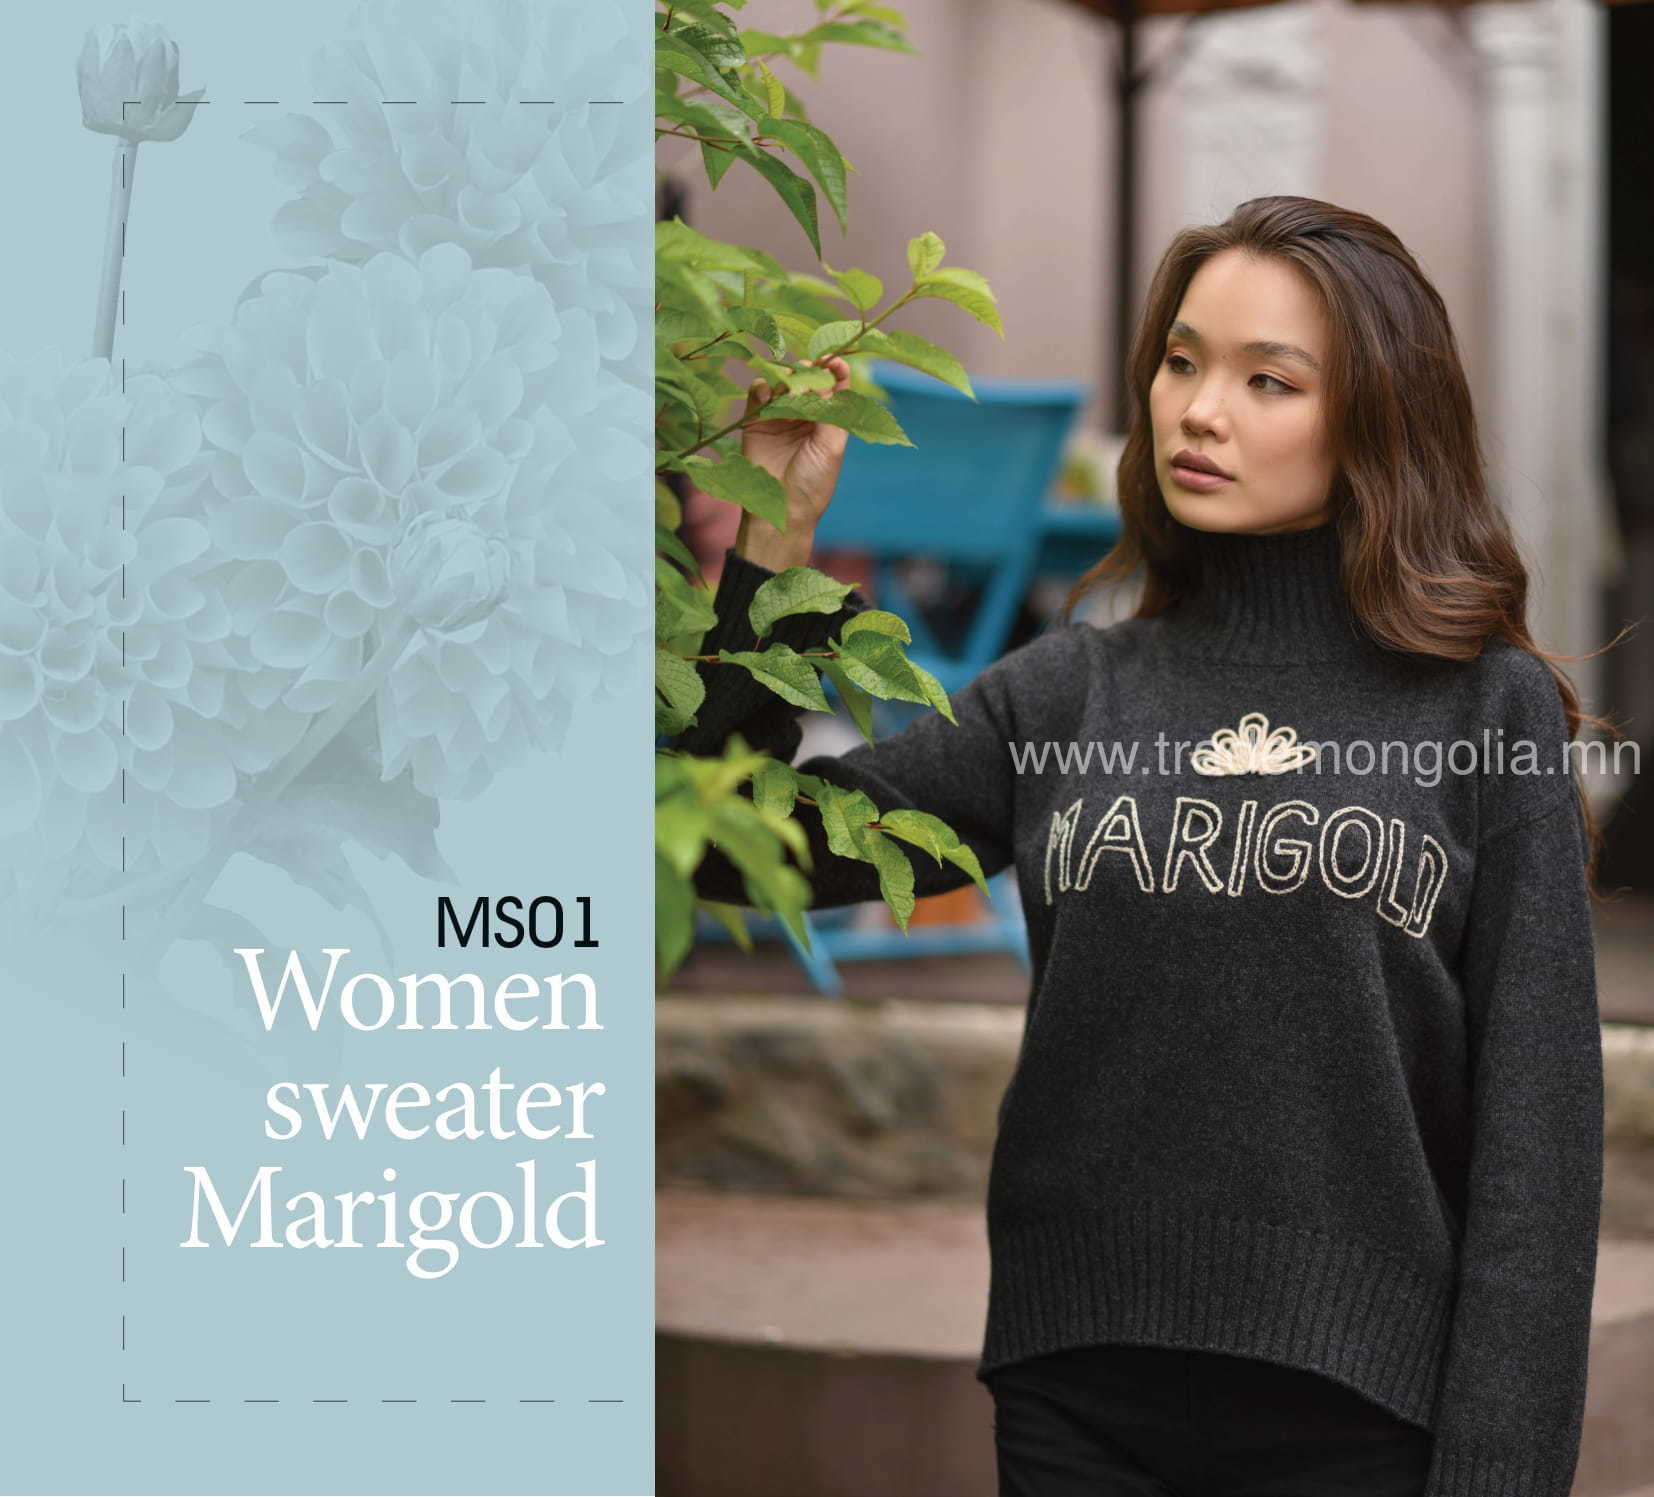 MS01 Women sweater Marigold